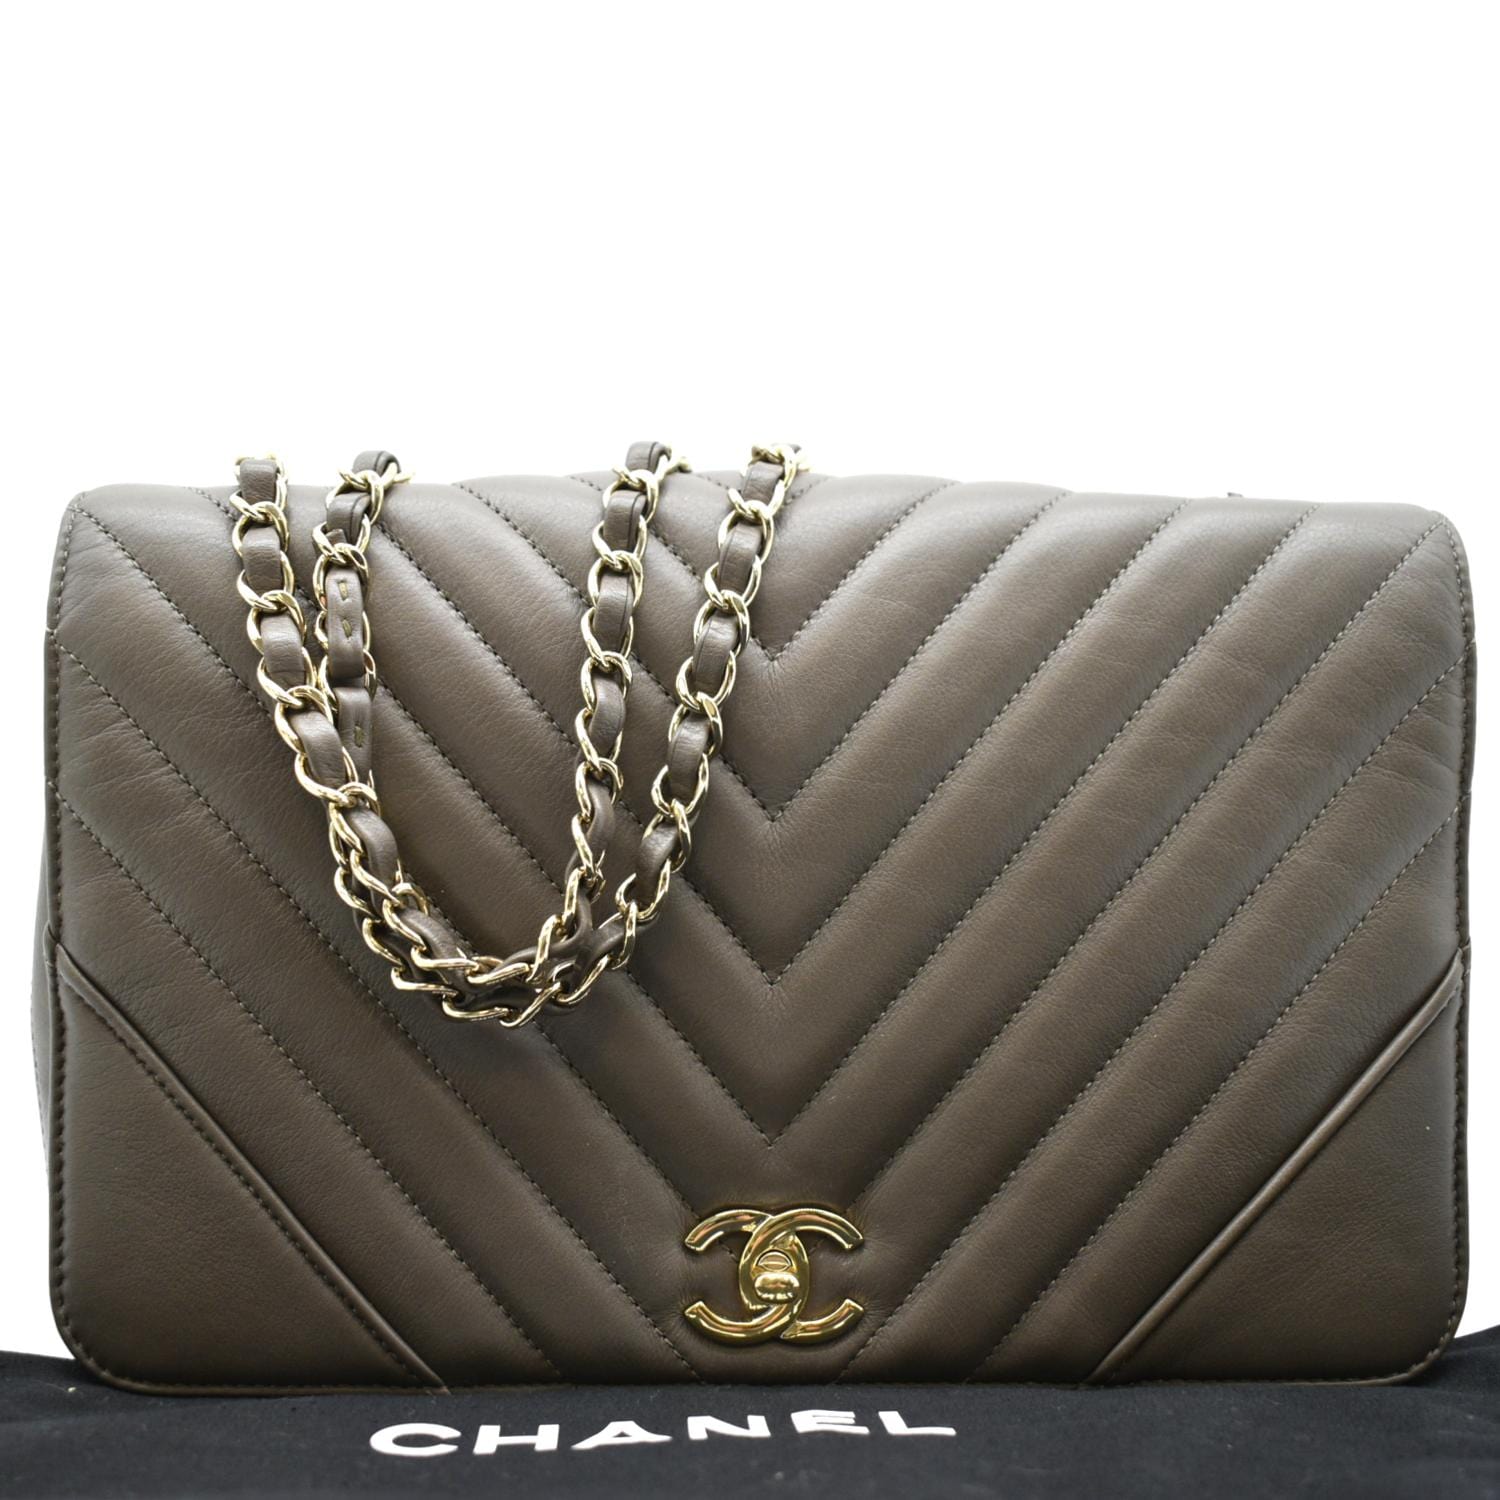 Chanel Statement Medium Flap Crossbody Bag